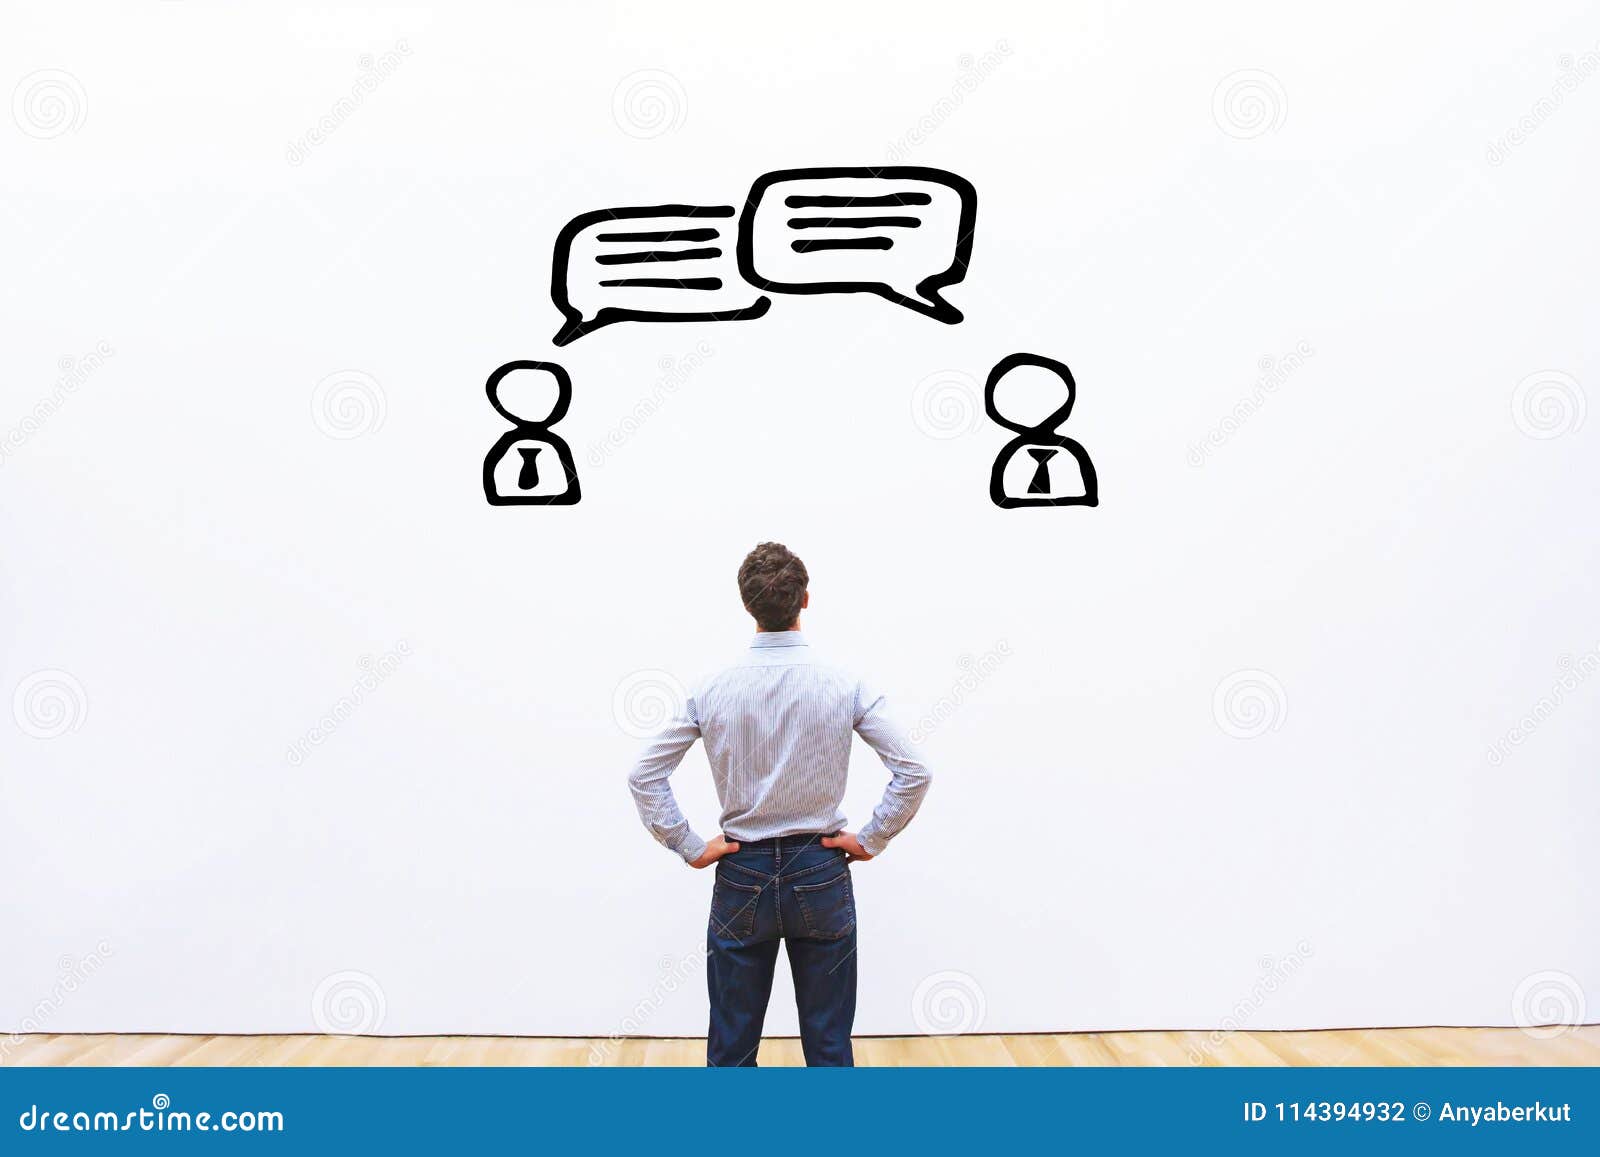 negotiation, dialog or dispute concept